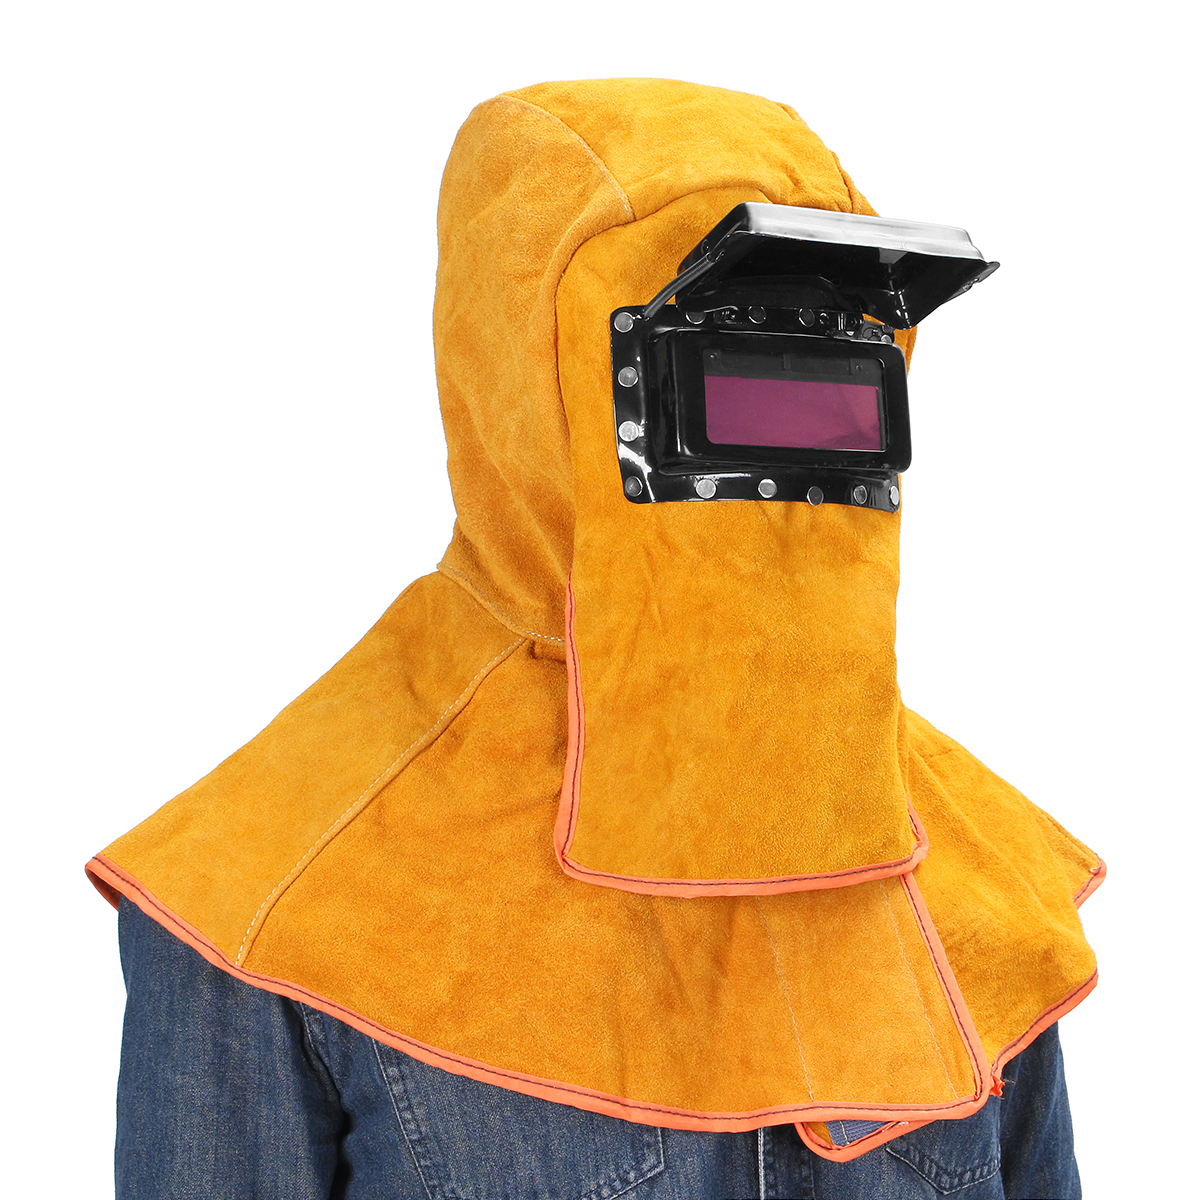 Leather-Solar-Auto-Darkening-Filter-Lens-Protect-Welding-Neck-Mask-Helmet-1339964-5